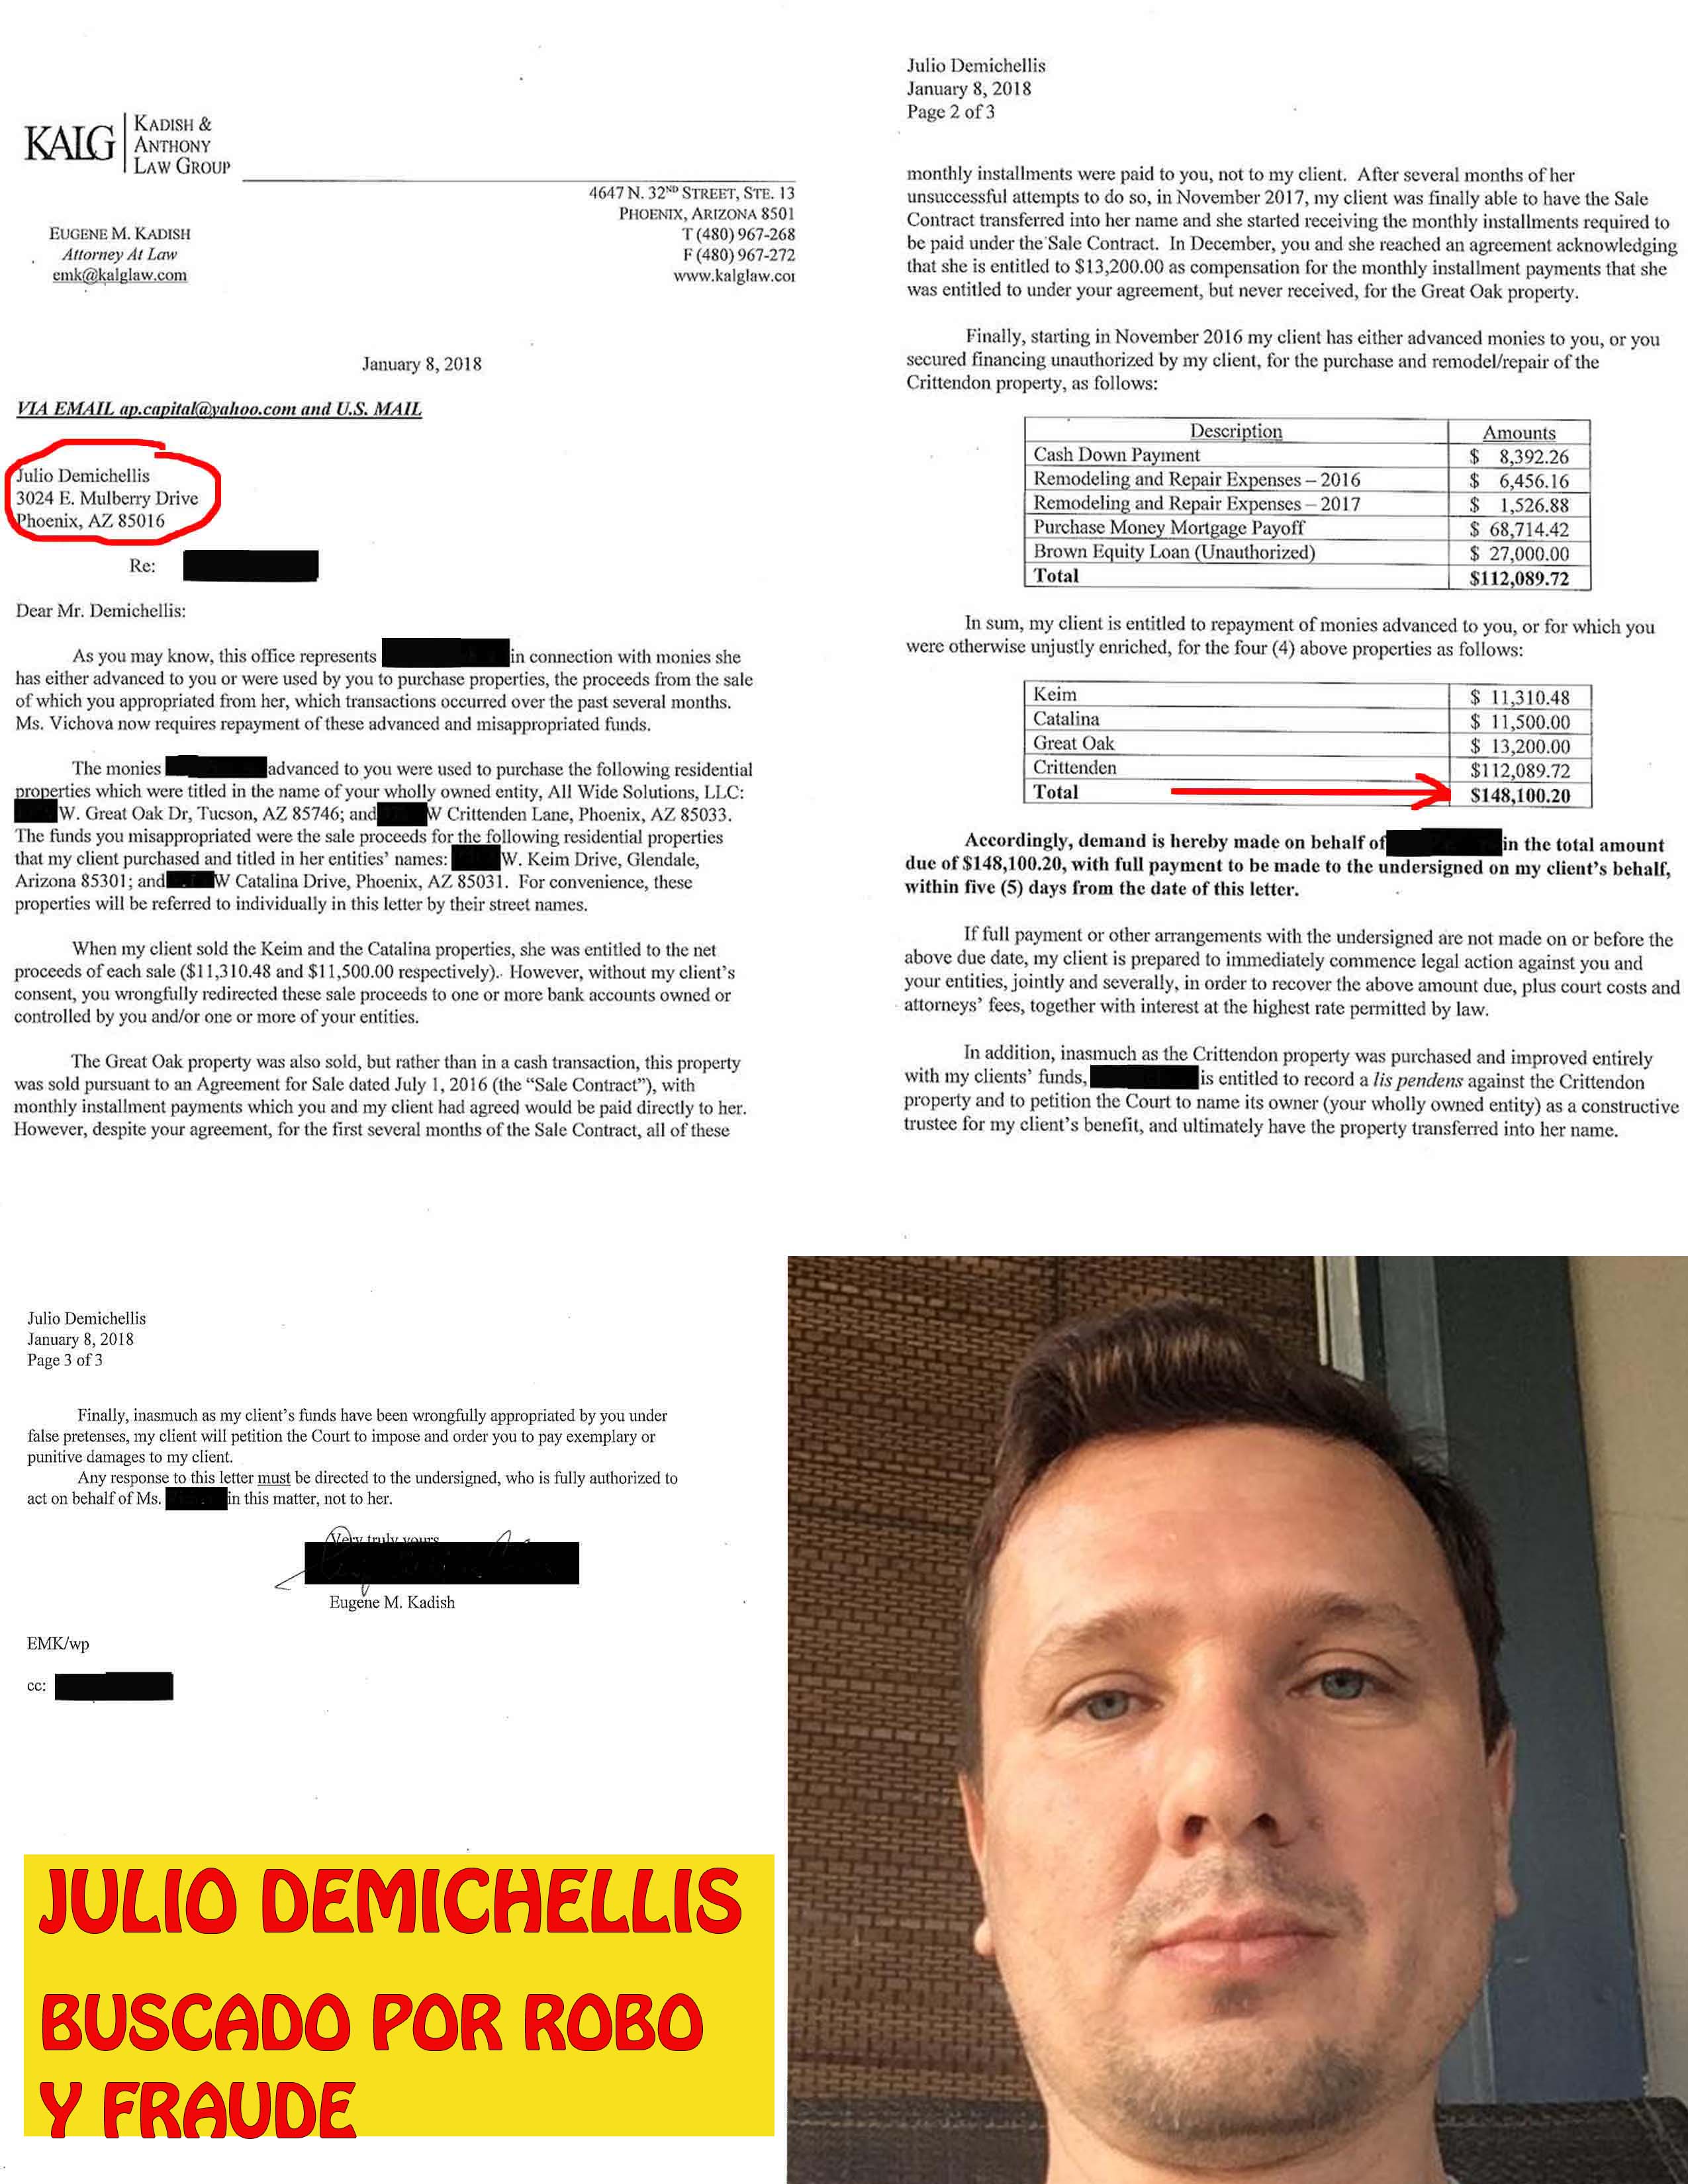 Demand Letter for Julio Demichellis ALL WIDE SOL